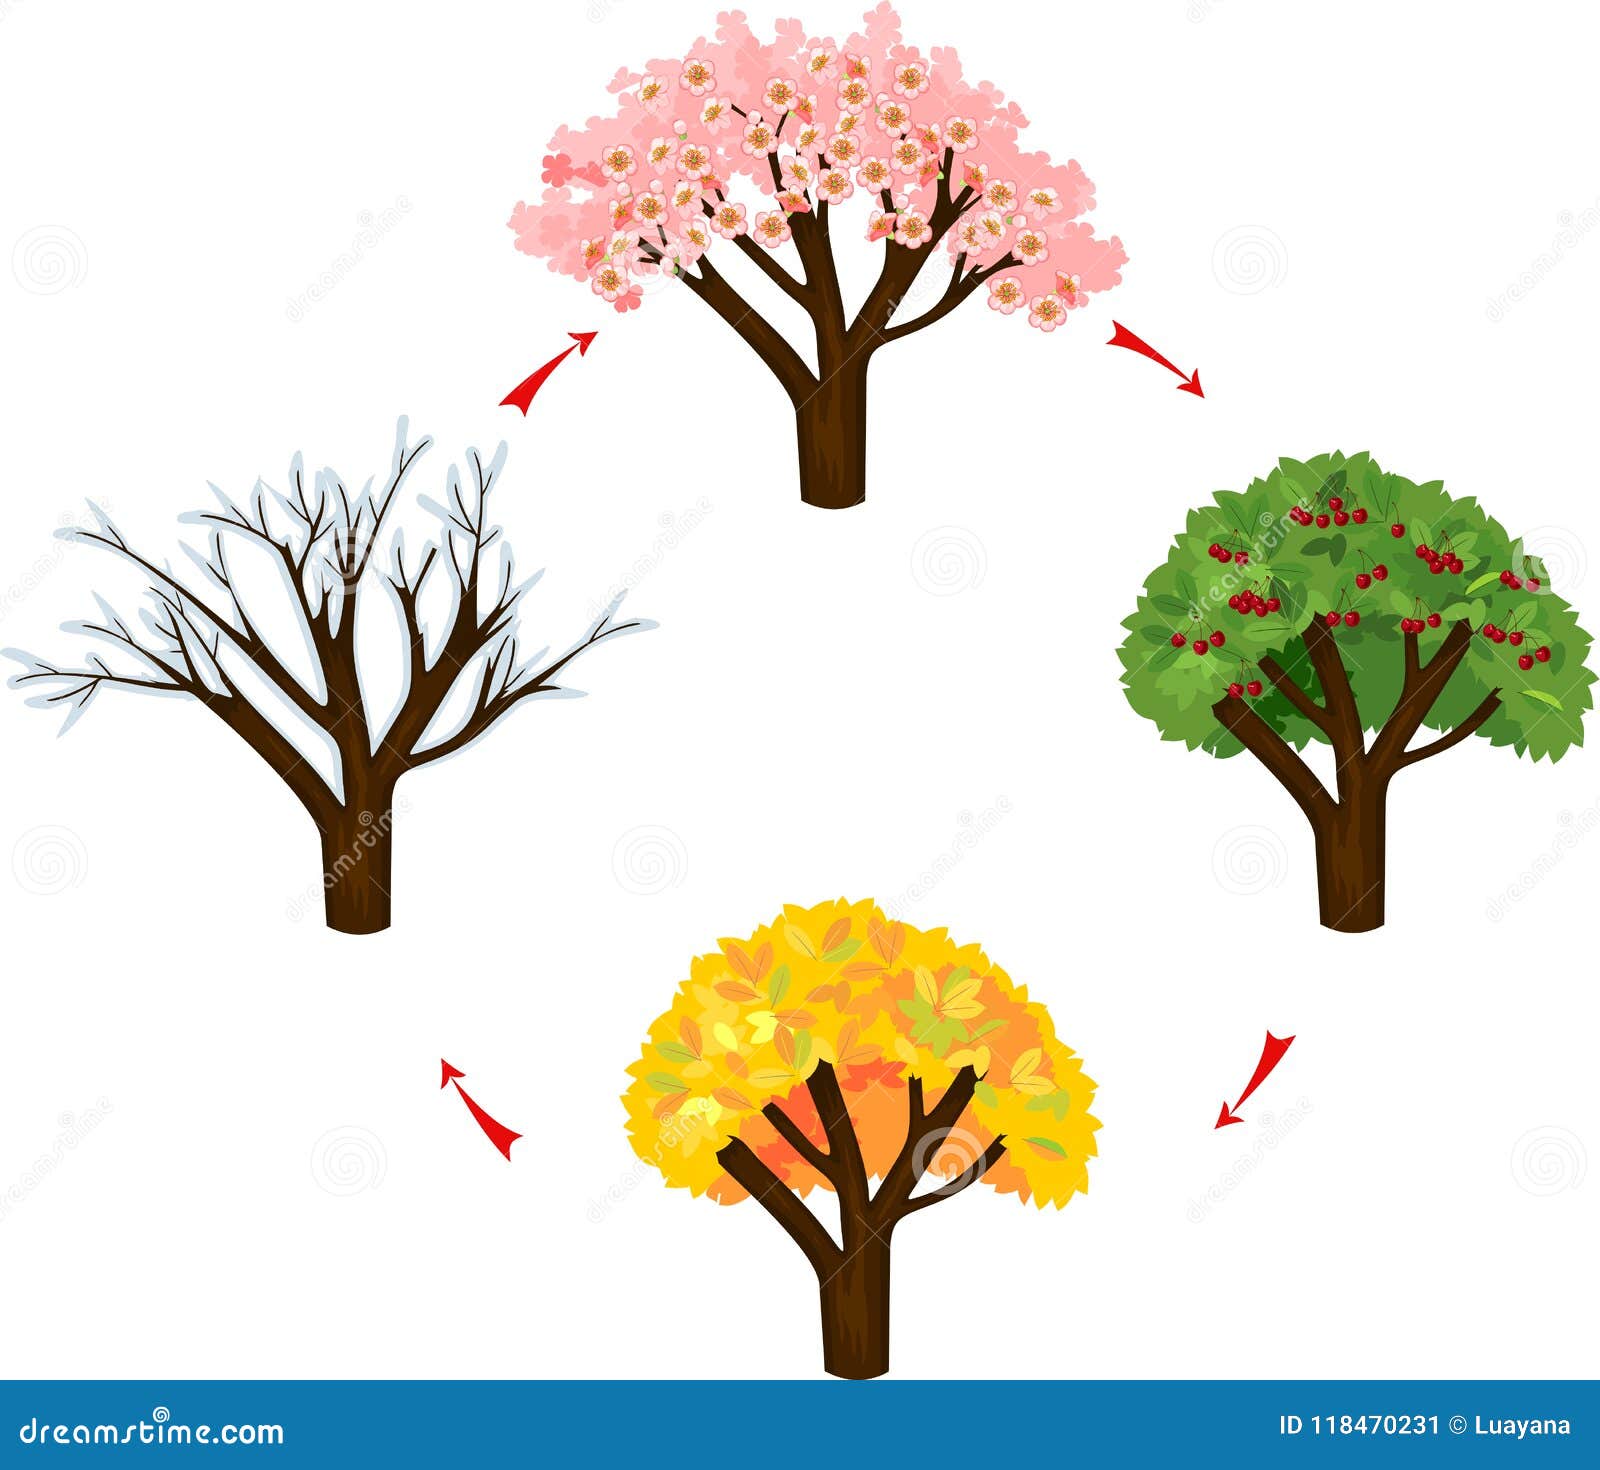 Tree at four seasons stock vector. Illustration of fall - 118470231